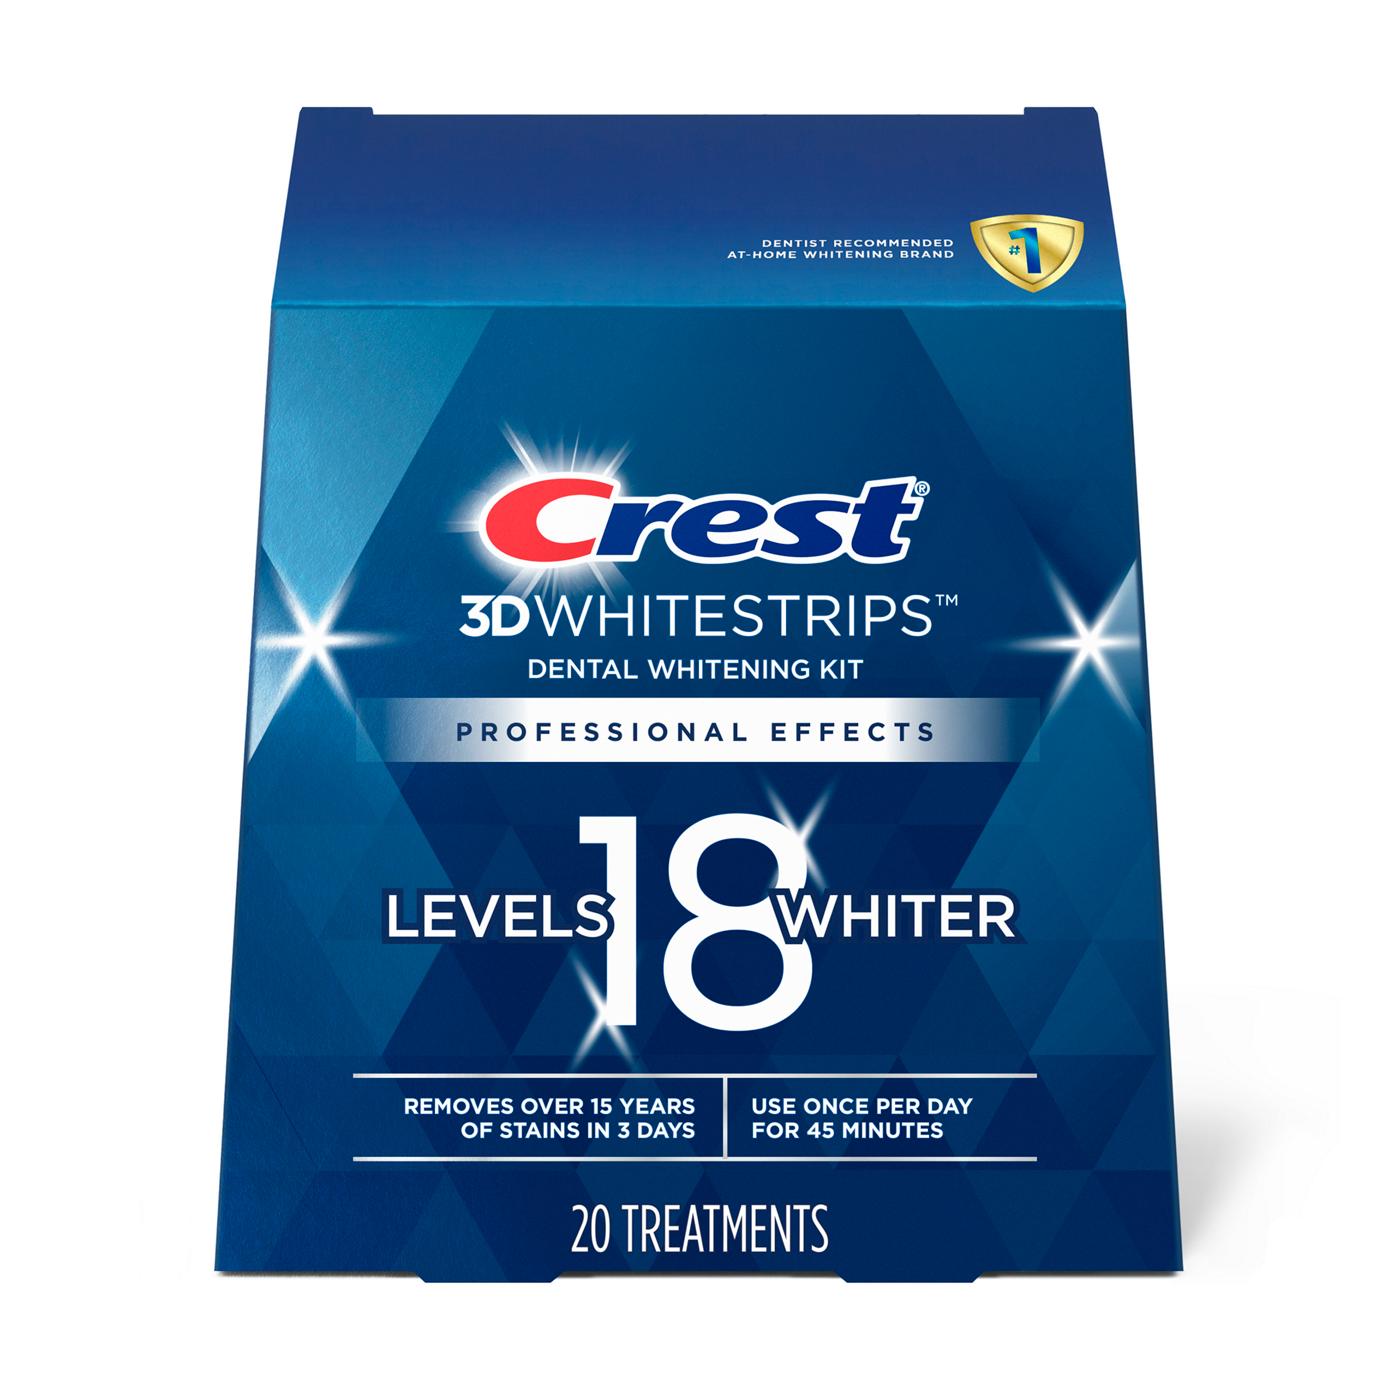 Crest 3D Whitestrips Professional Effects Dental Whitening Kit; image 1 of 6